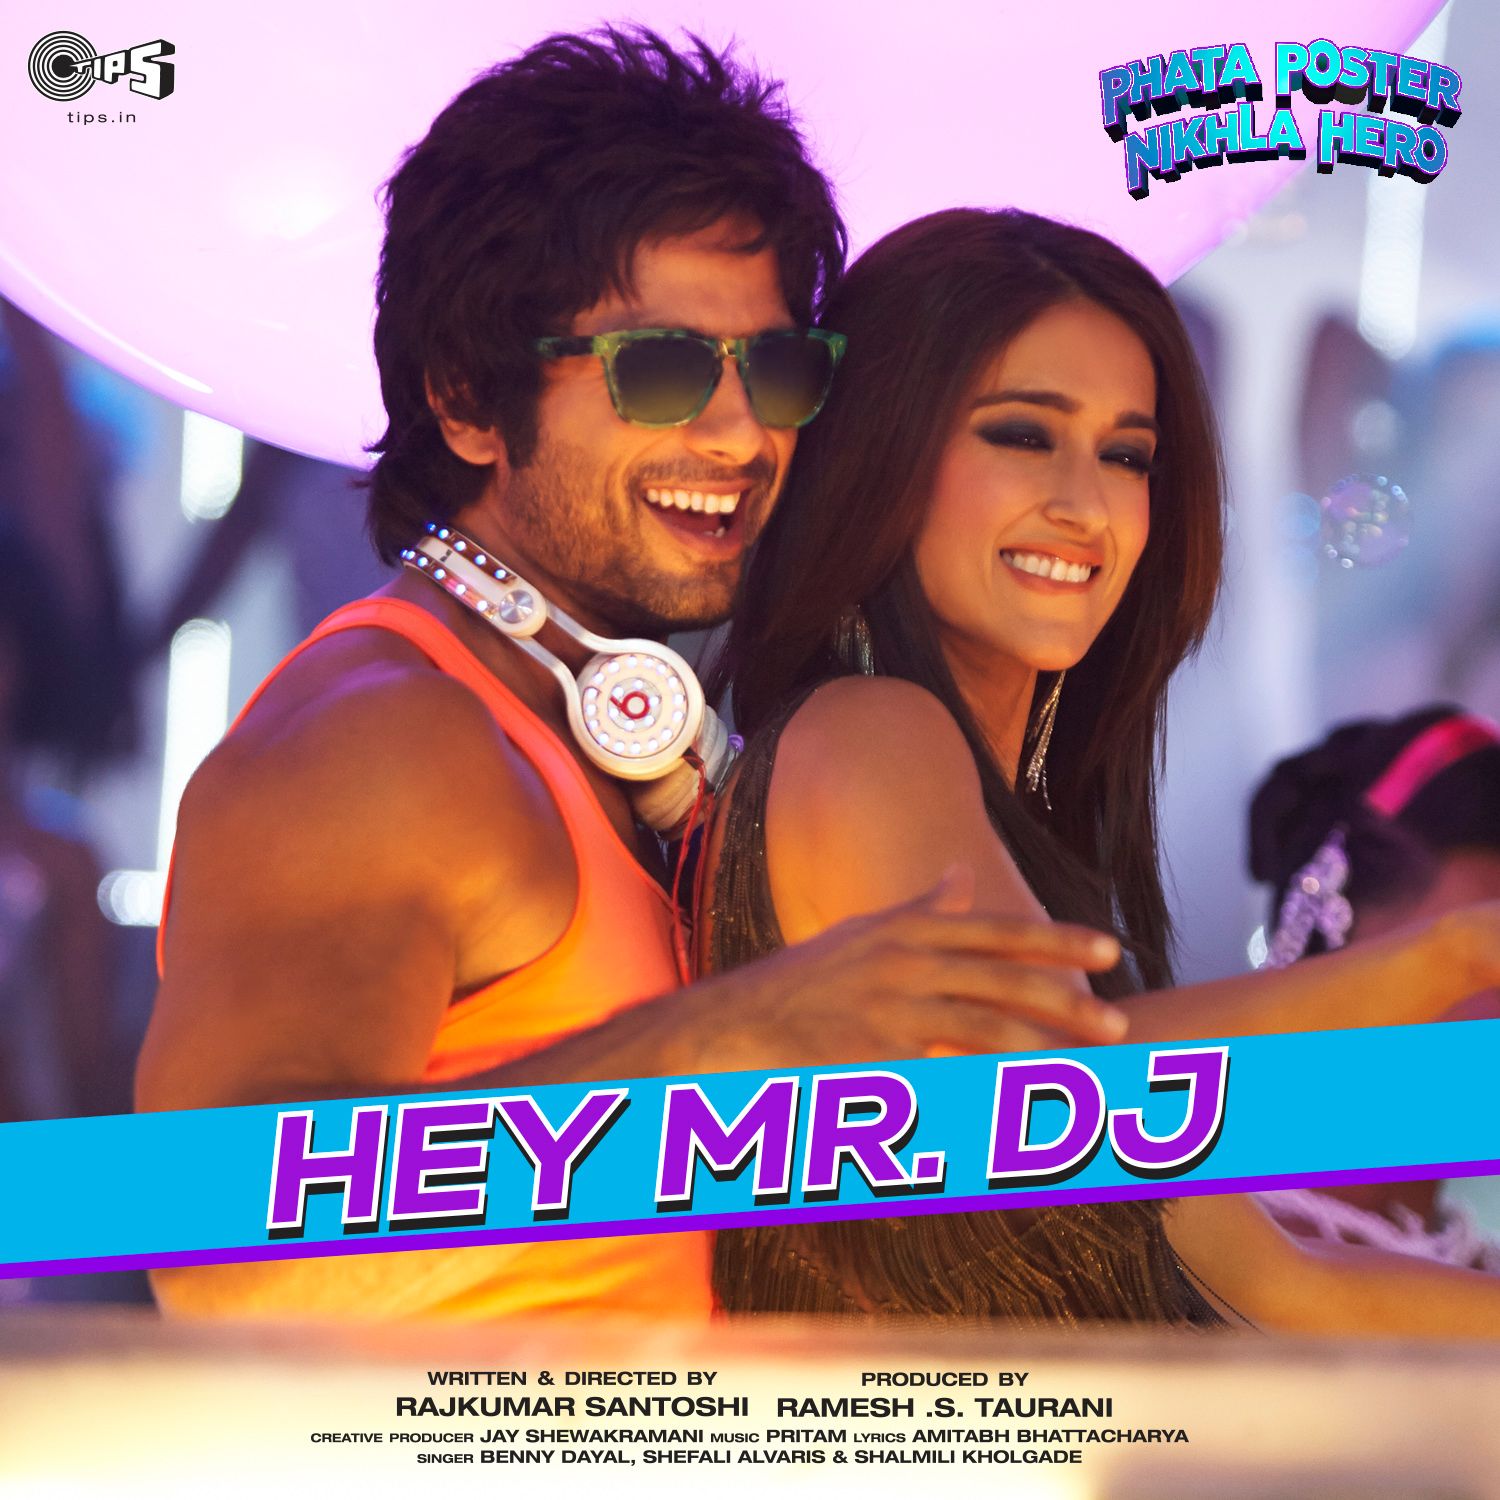 WATCH: Shahid Kapoor & Ileana D’Cruz in Hey Mr. DJ